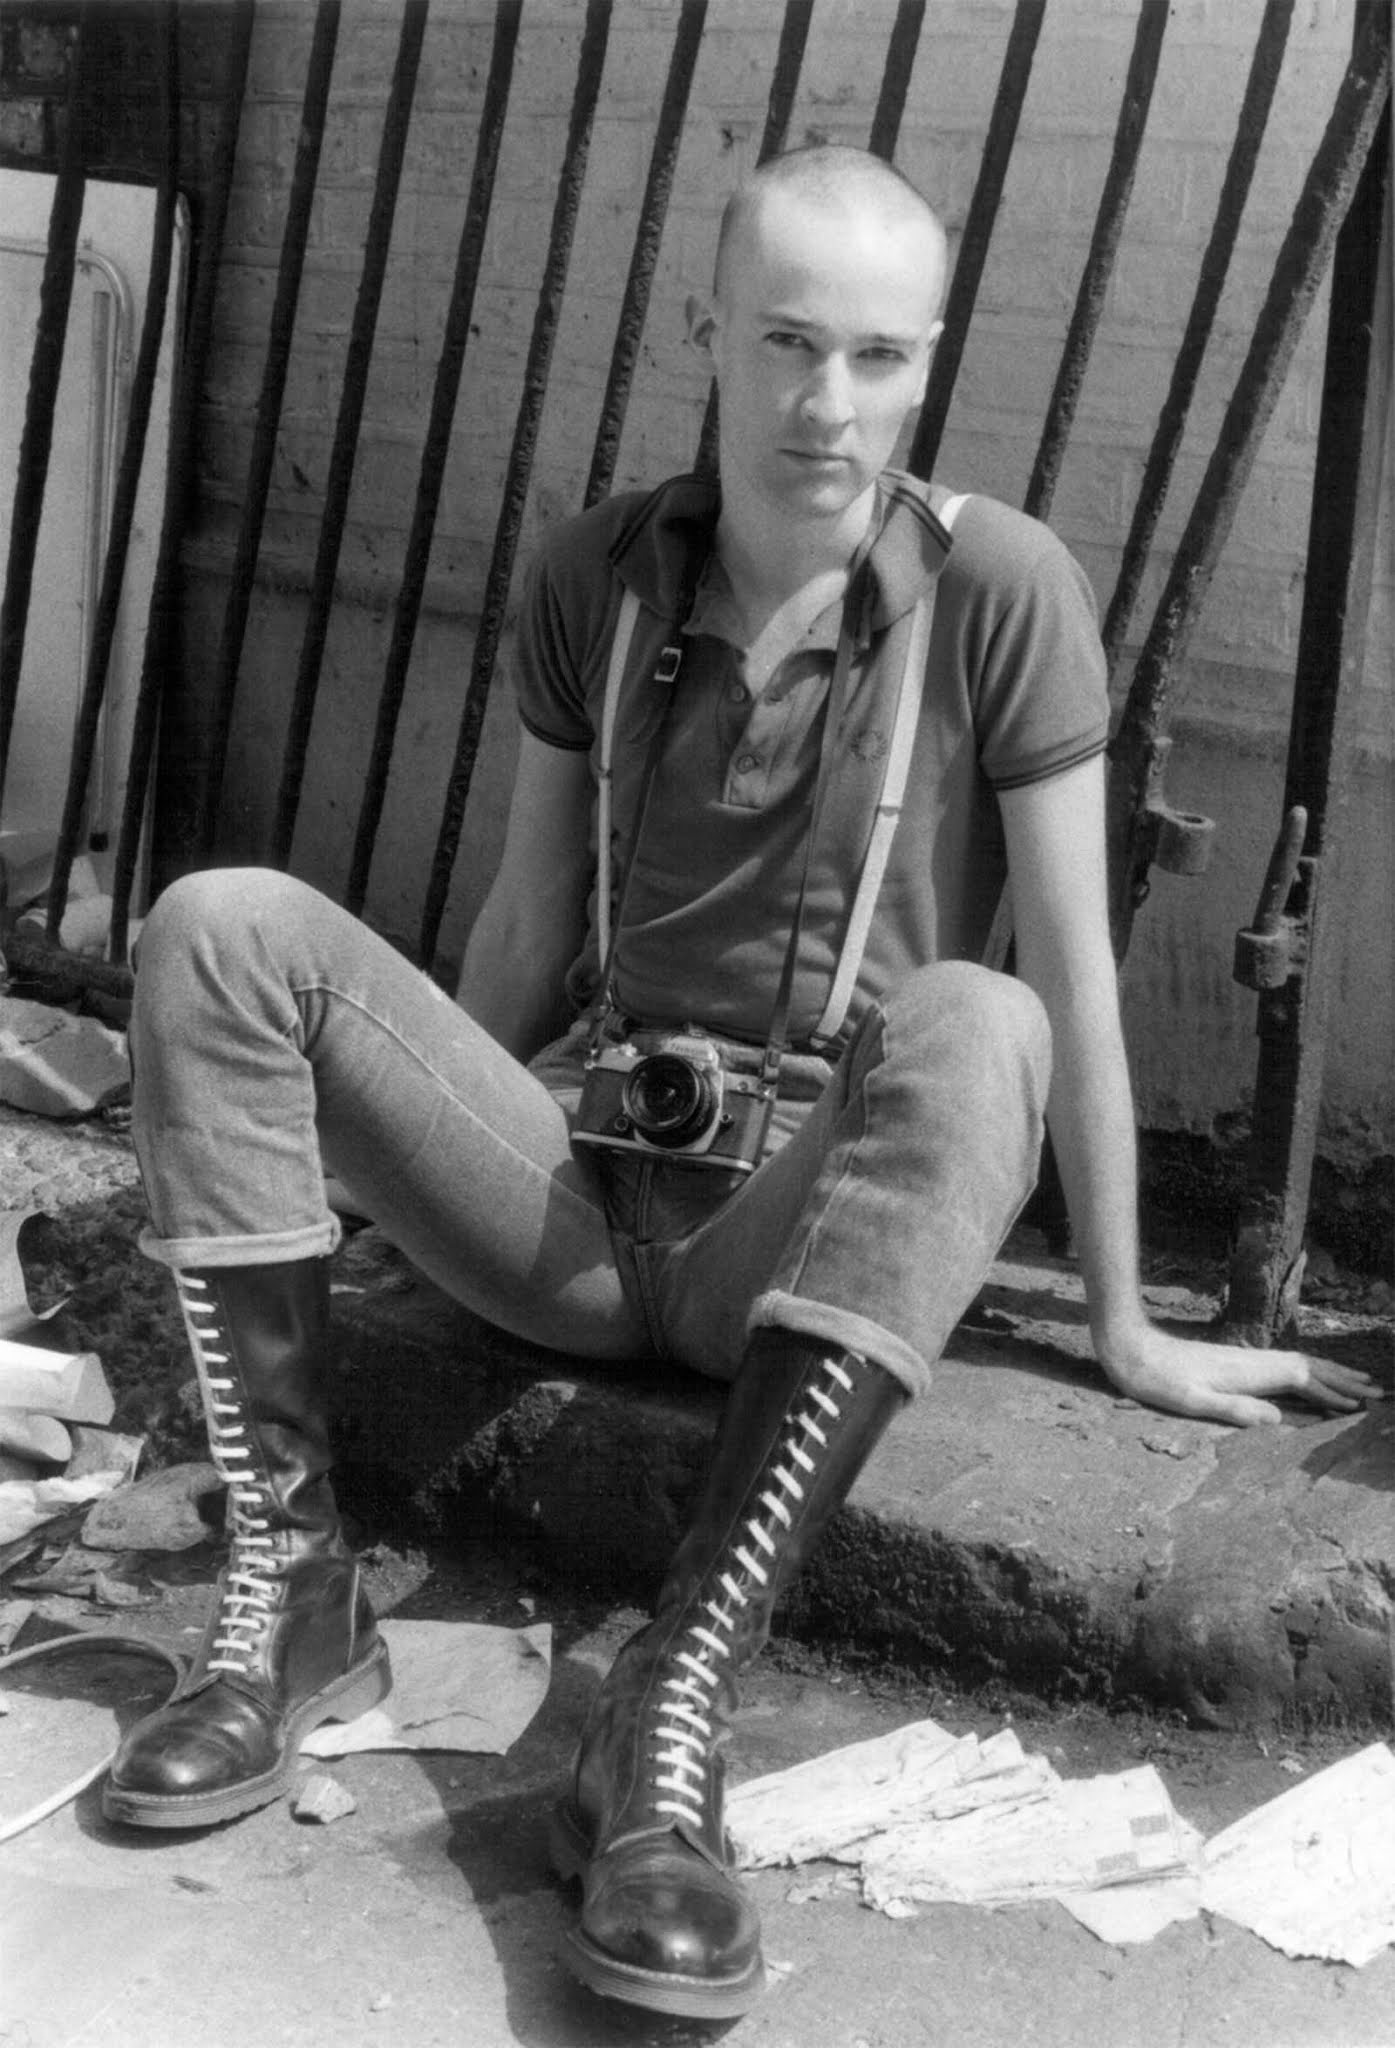 The original British Skinhead subculture in photographic portraits ...